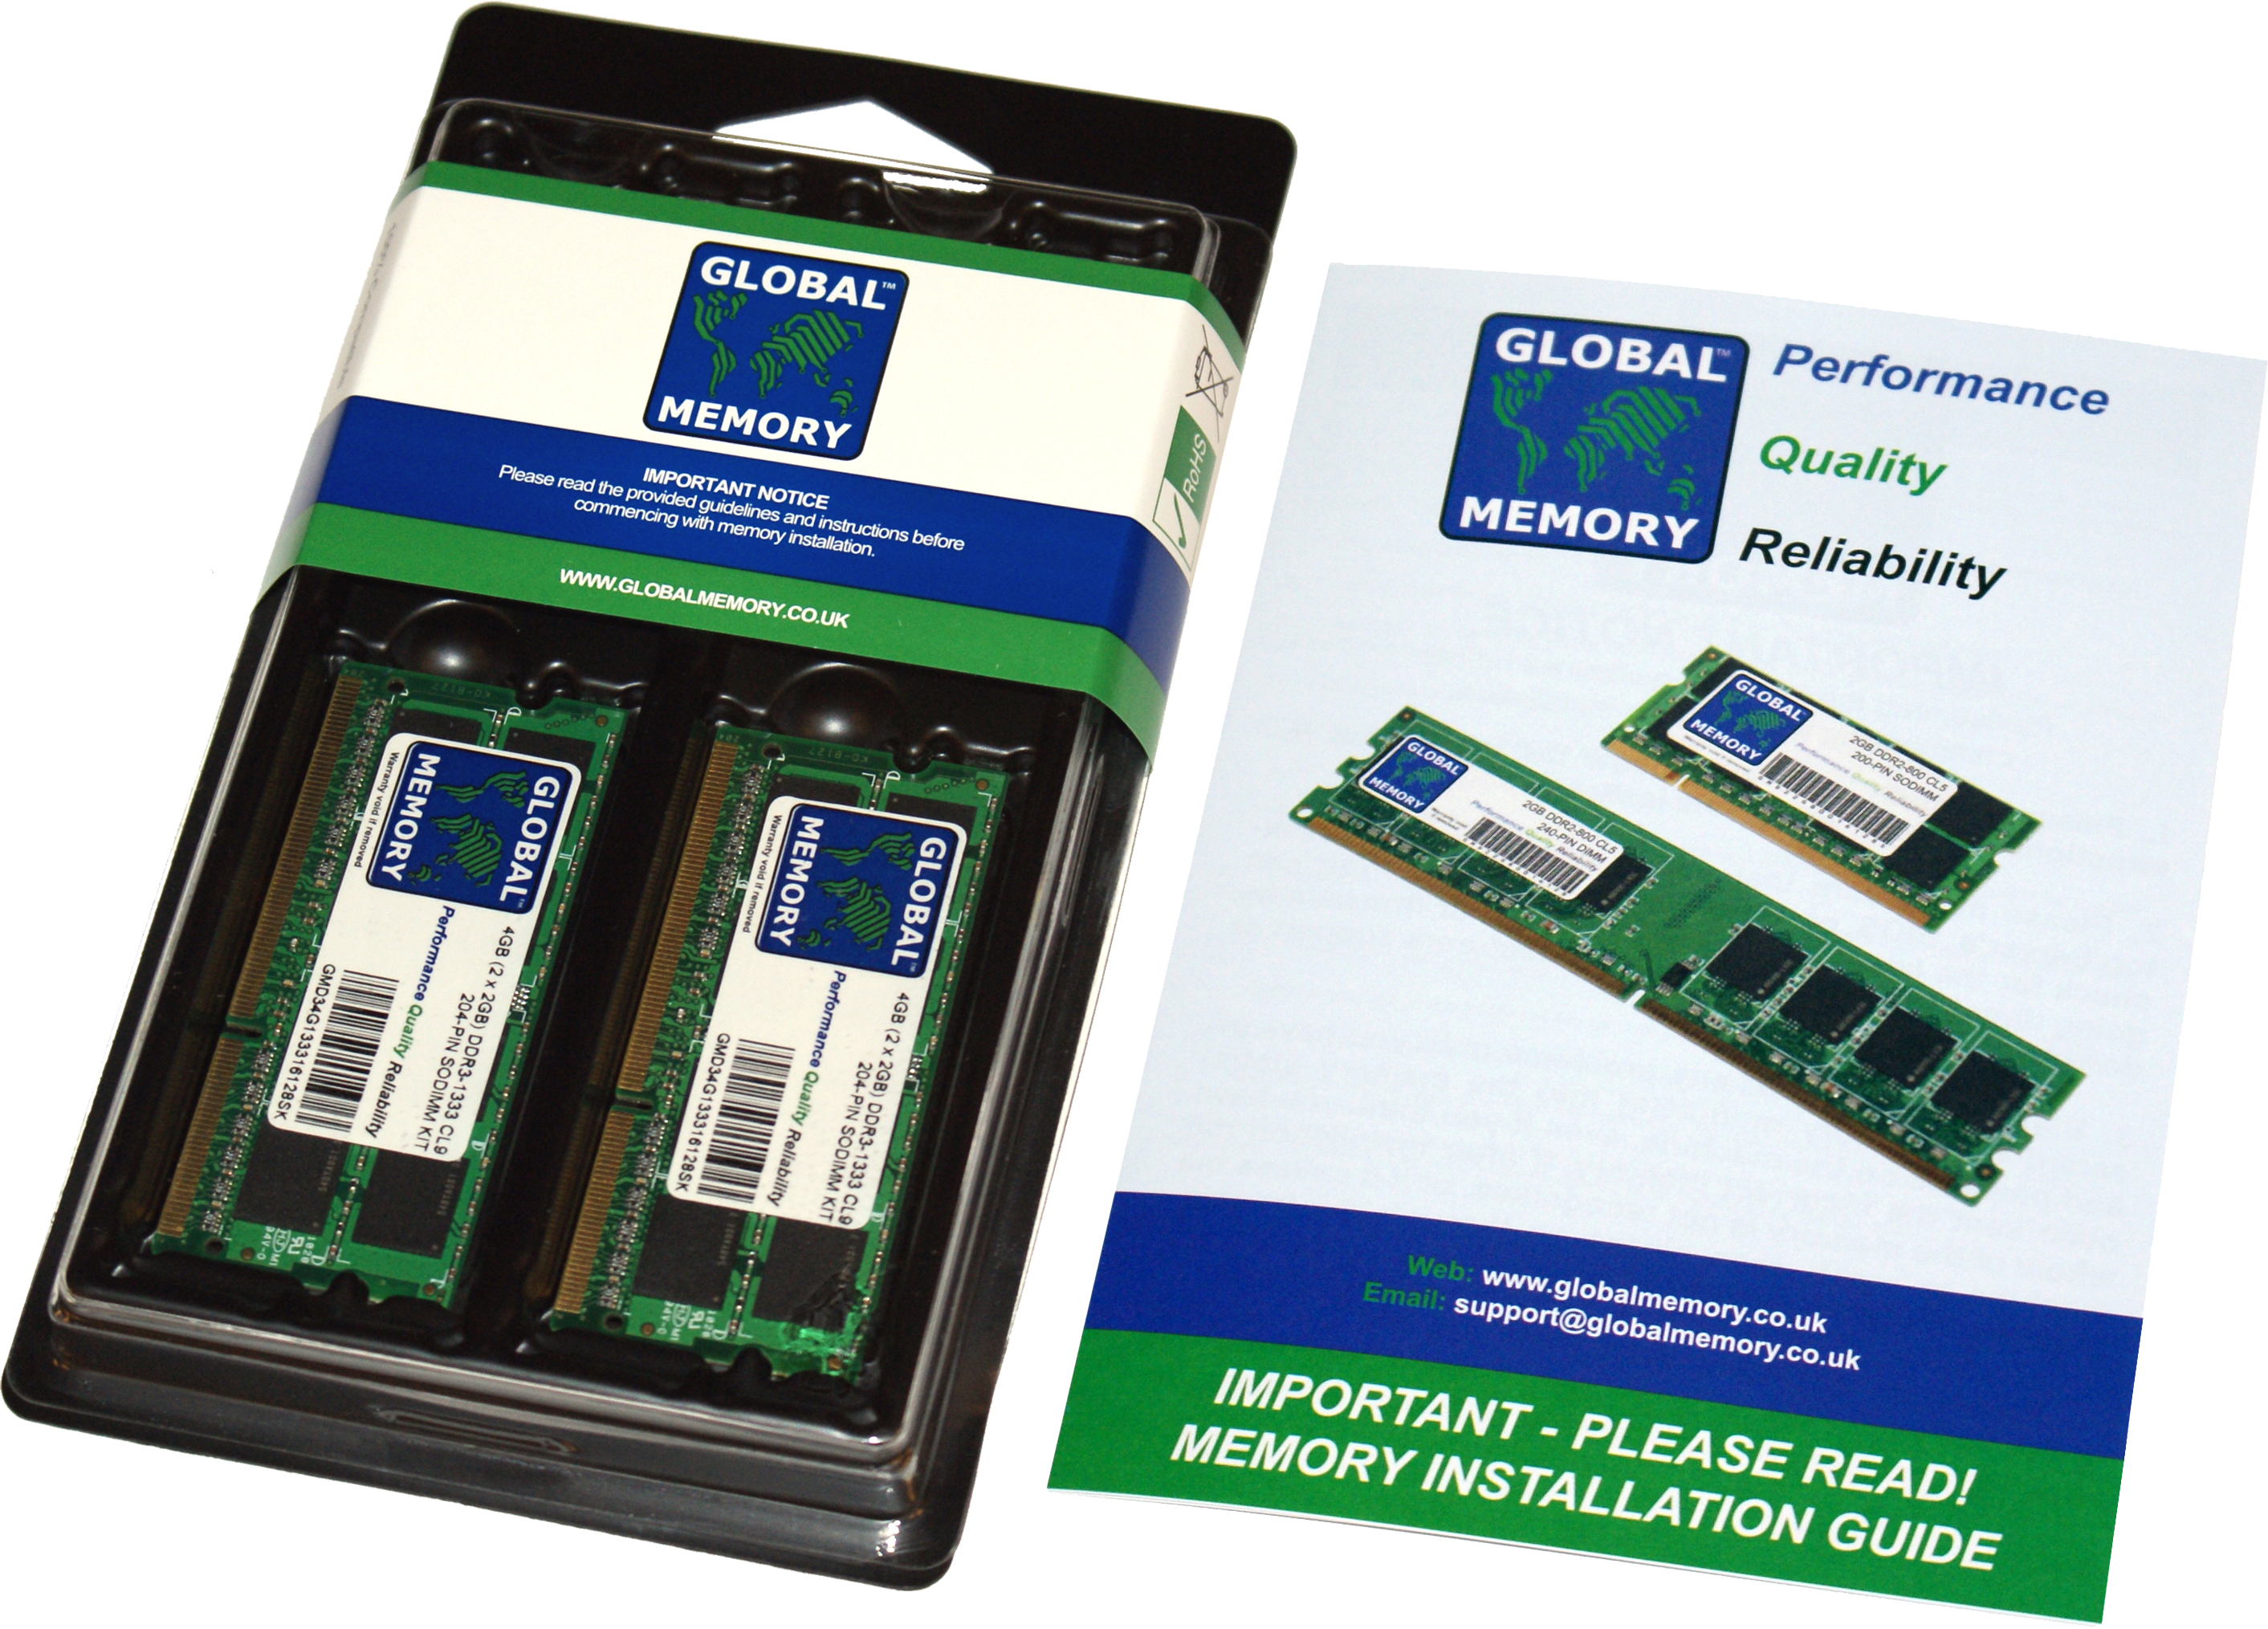 64GB (2 x 32GB) DDR4 2400MHz PC4-19200 260-PIN SODIMM MEMORY RAM KIT FOR HEWLETT-PACKARD LAPTOPS/NOTEBOOKS